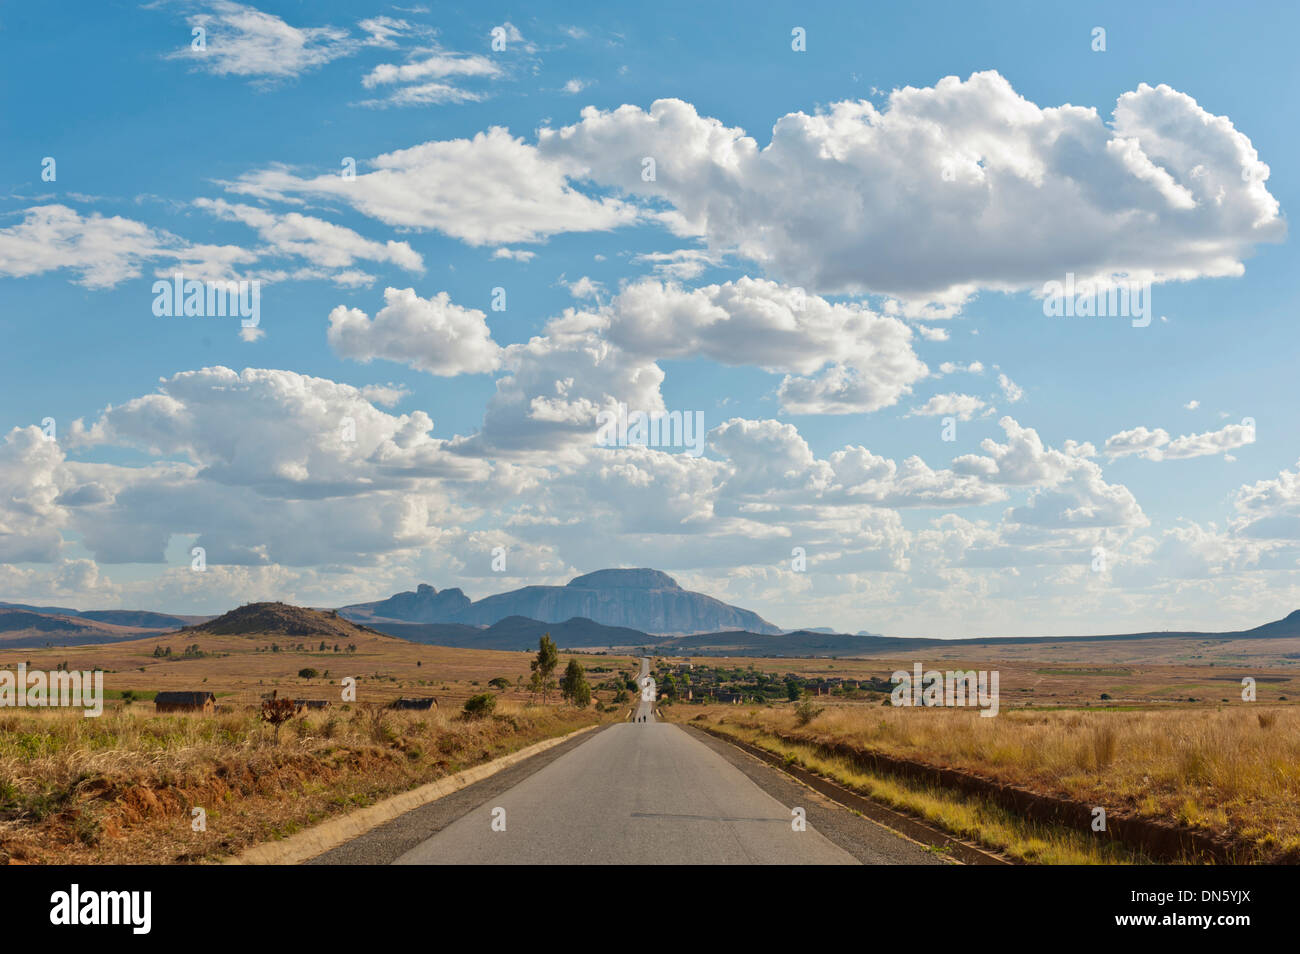 Long straight road, vast arid landscape, sky with clouds, Isalo National Park near Ranohira, Madagascar Stock Photo